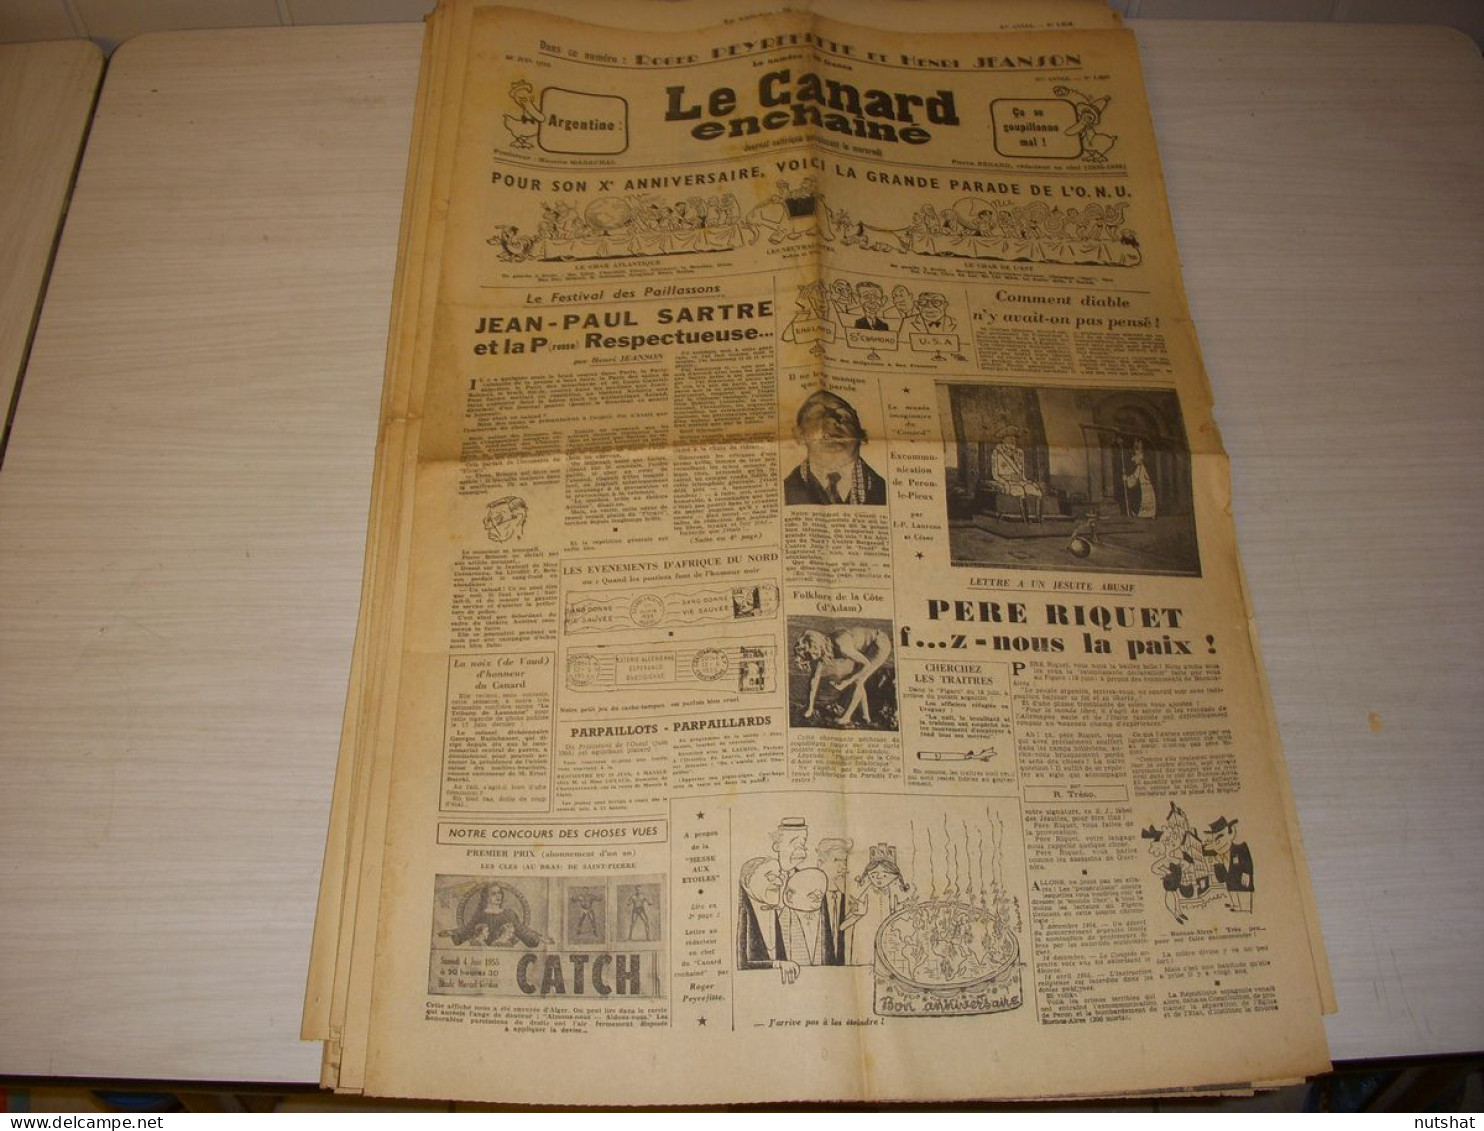 CANARD ENCHAINE 1809 22.06.1955 Henri SALVADOR Rene PLEVEN Alphonse JUIN SARTRE - Politique